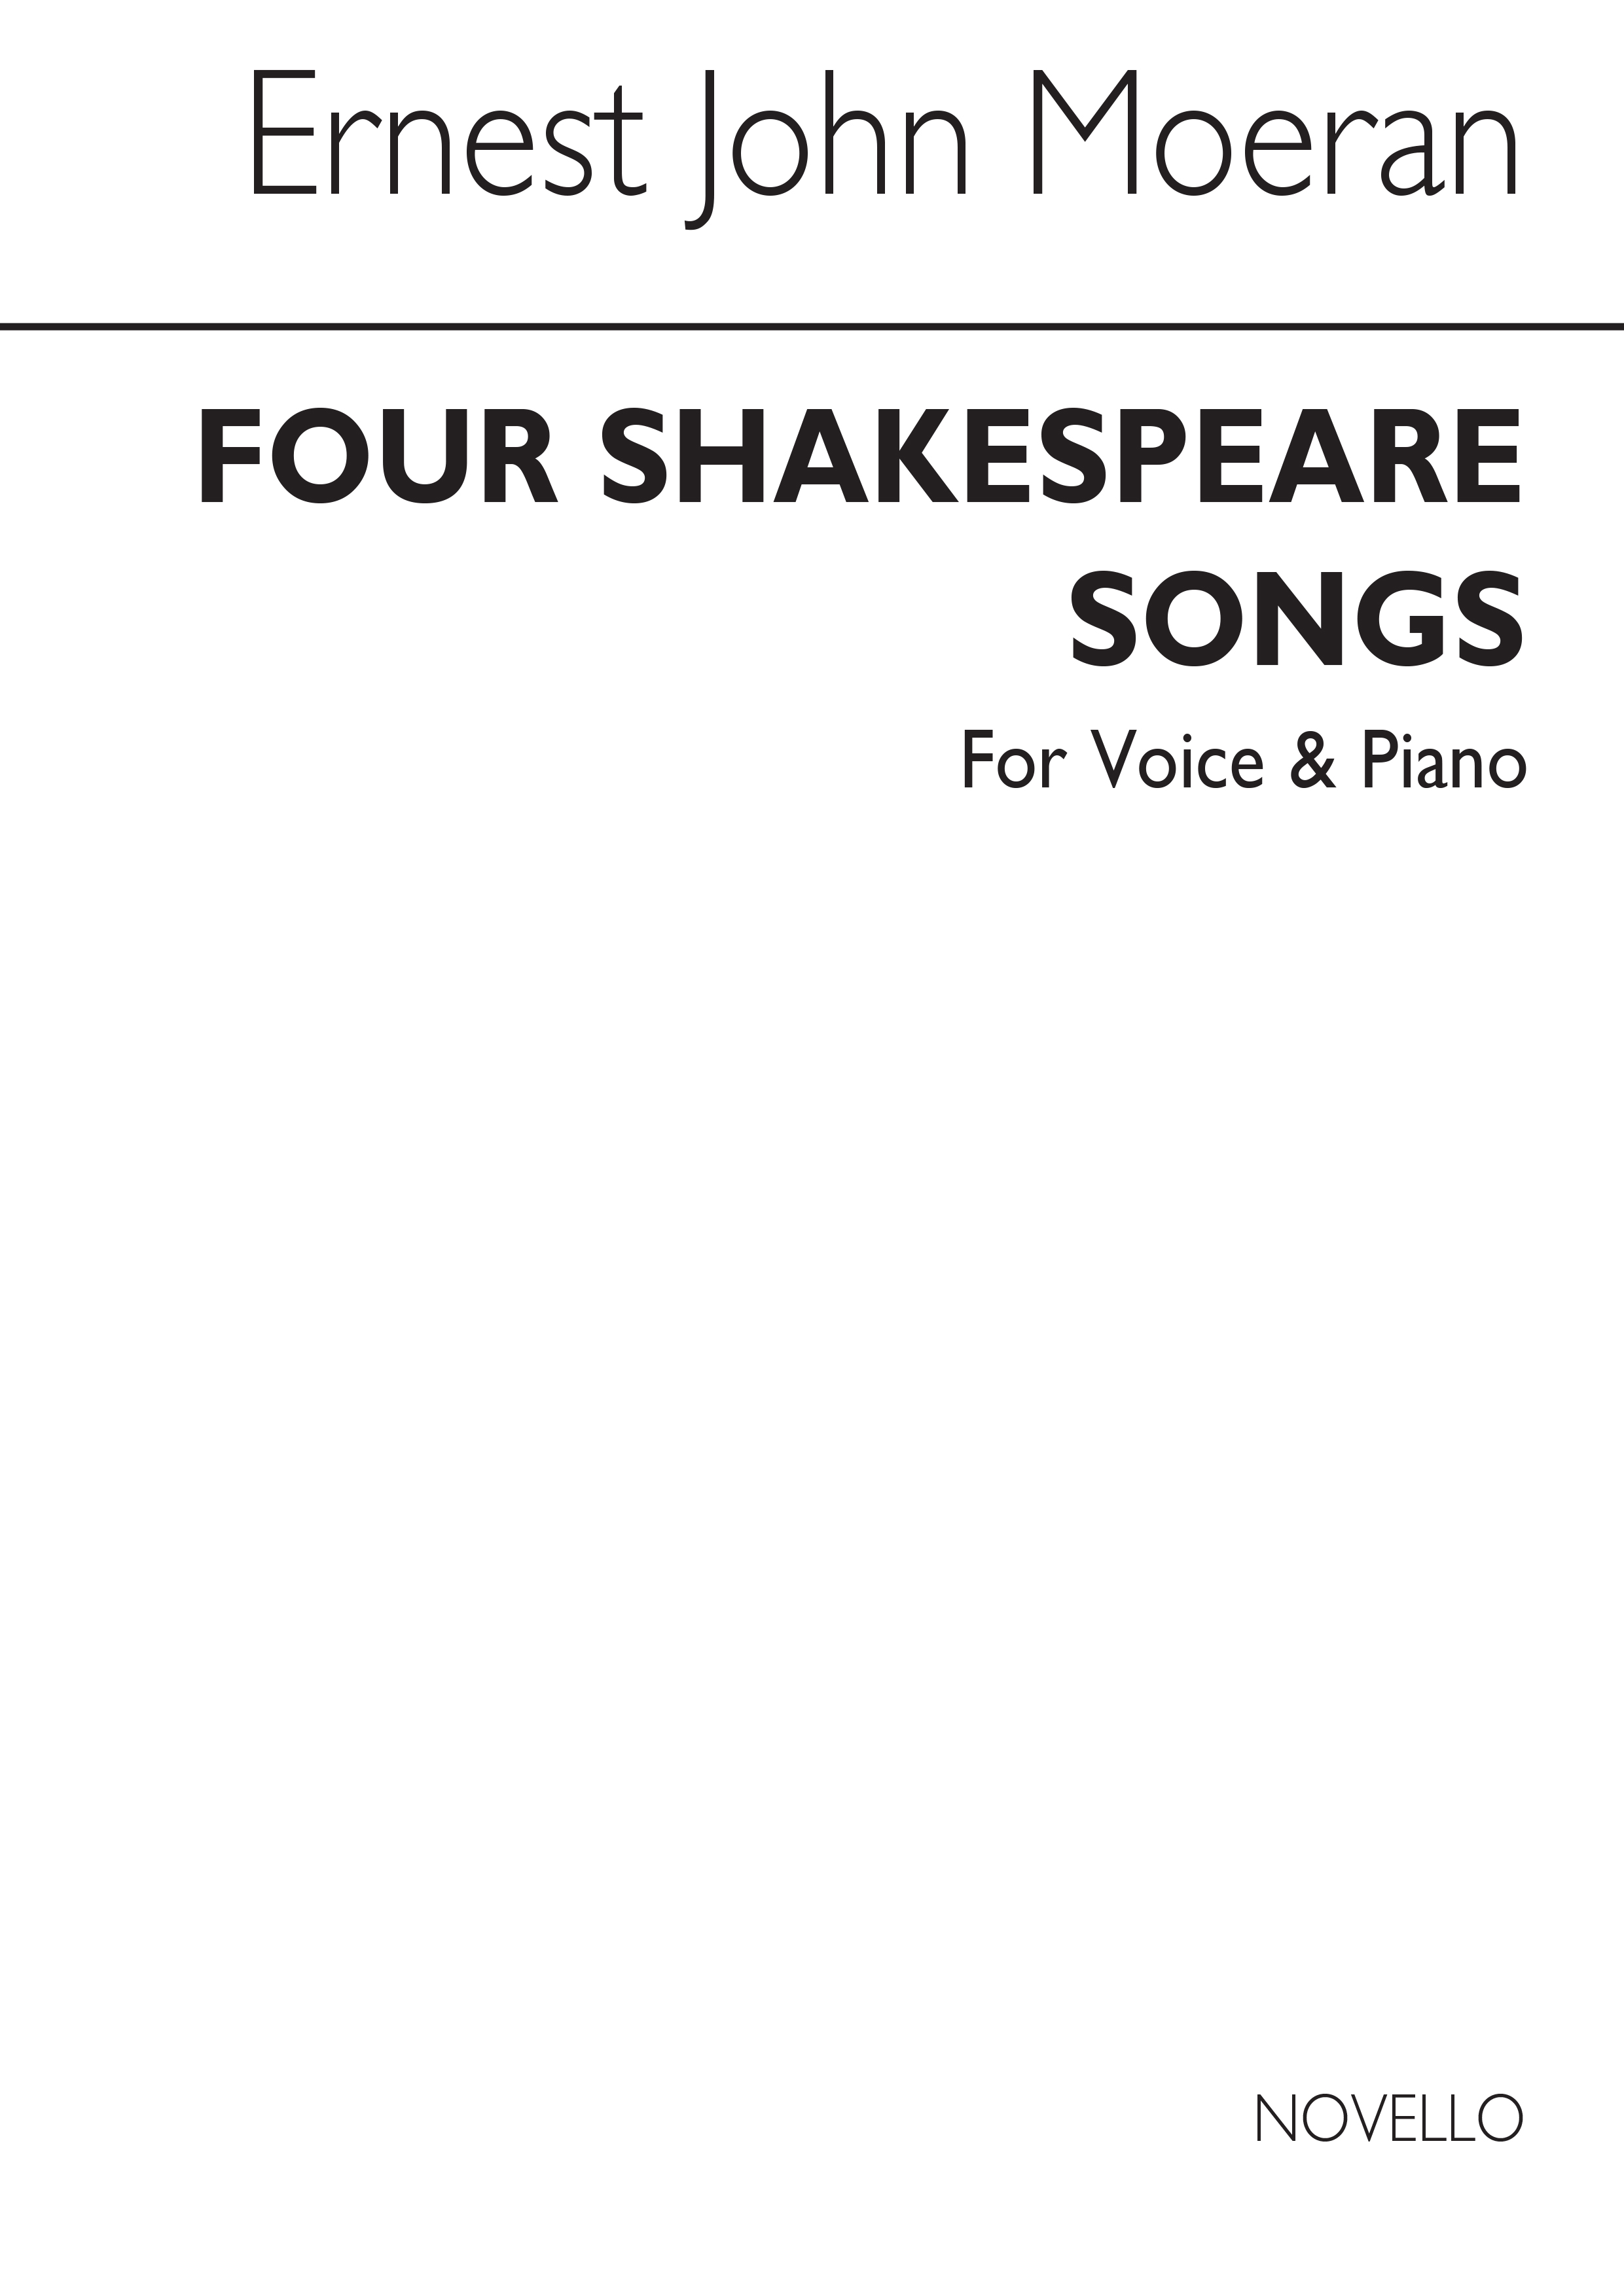 E.J. Moeran: Four Shakespeare Songs